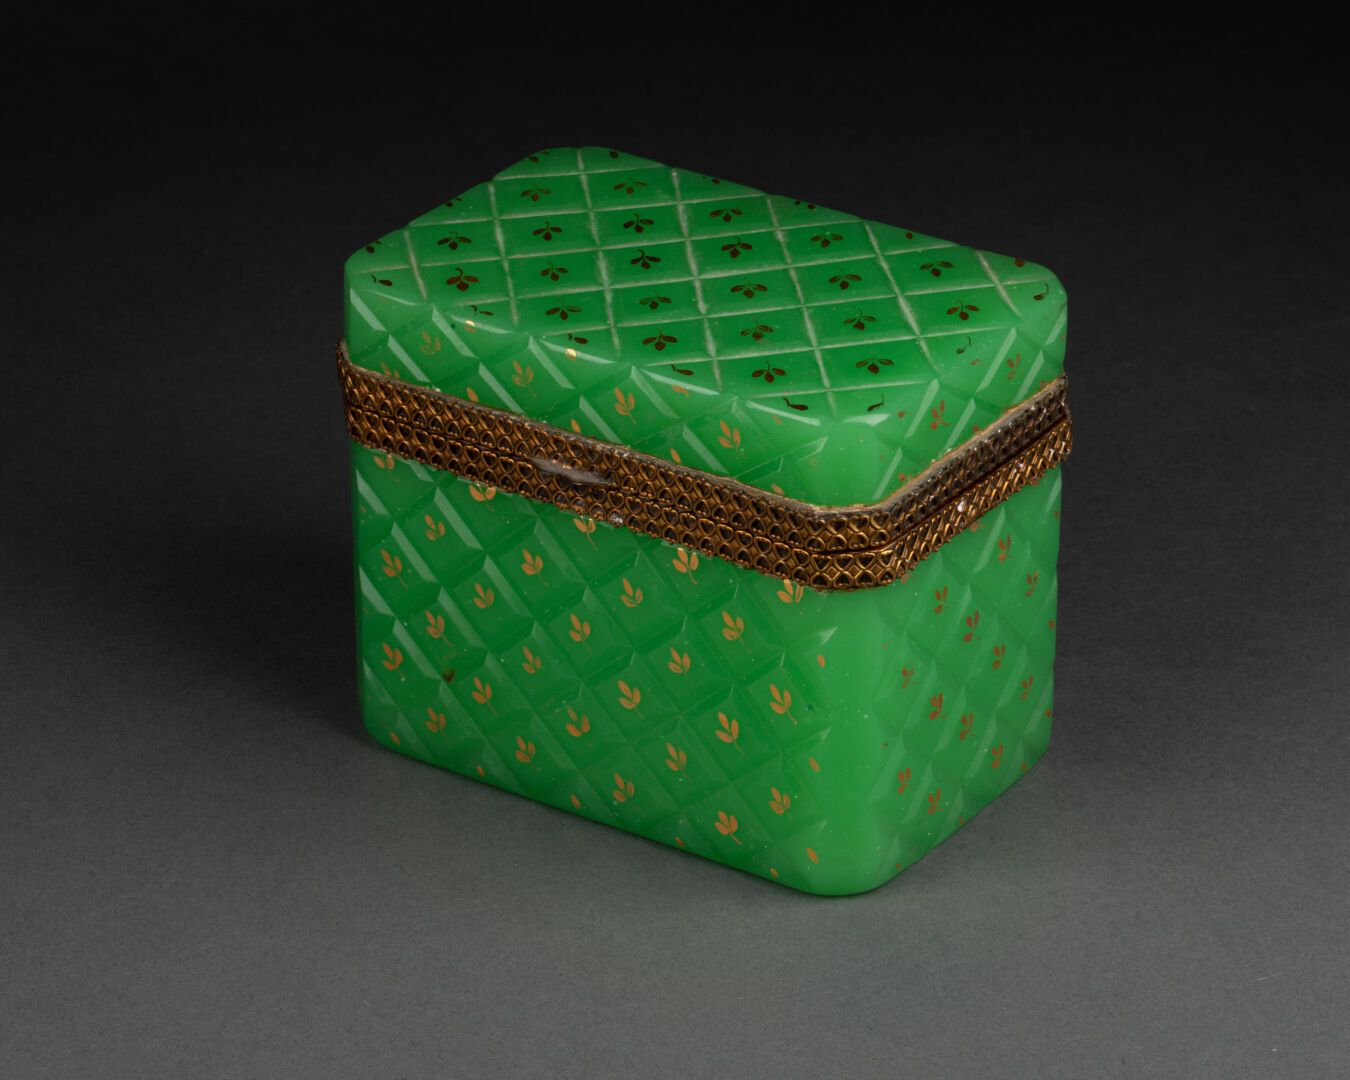 Null 长方形珠宝盒，装饰有刻有菱形图案的花茎

翡翠绿着色乳白玻璃

H.10 cm - W. 13 cm - D. 8 cm

磨损的